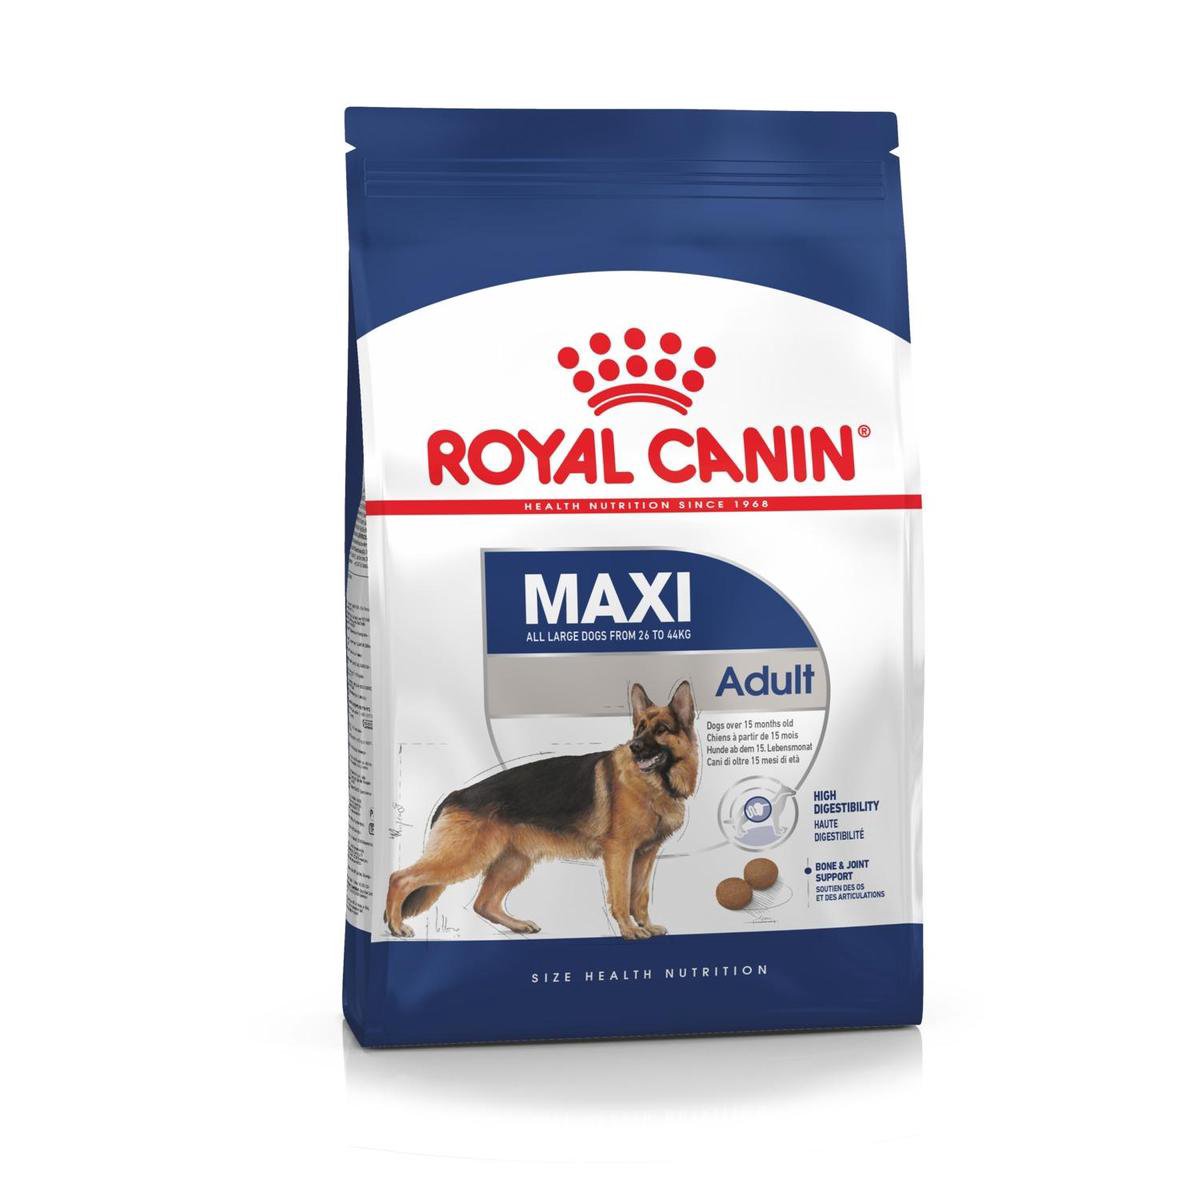 2. Royal Canin Maxi Adult